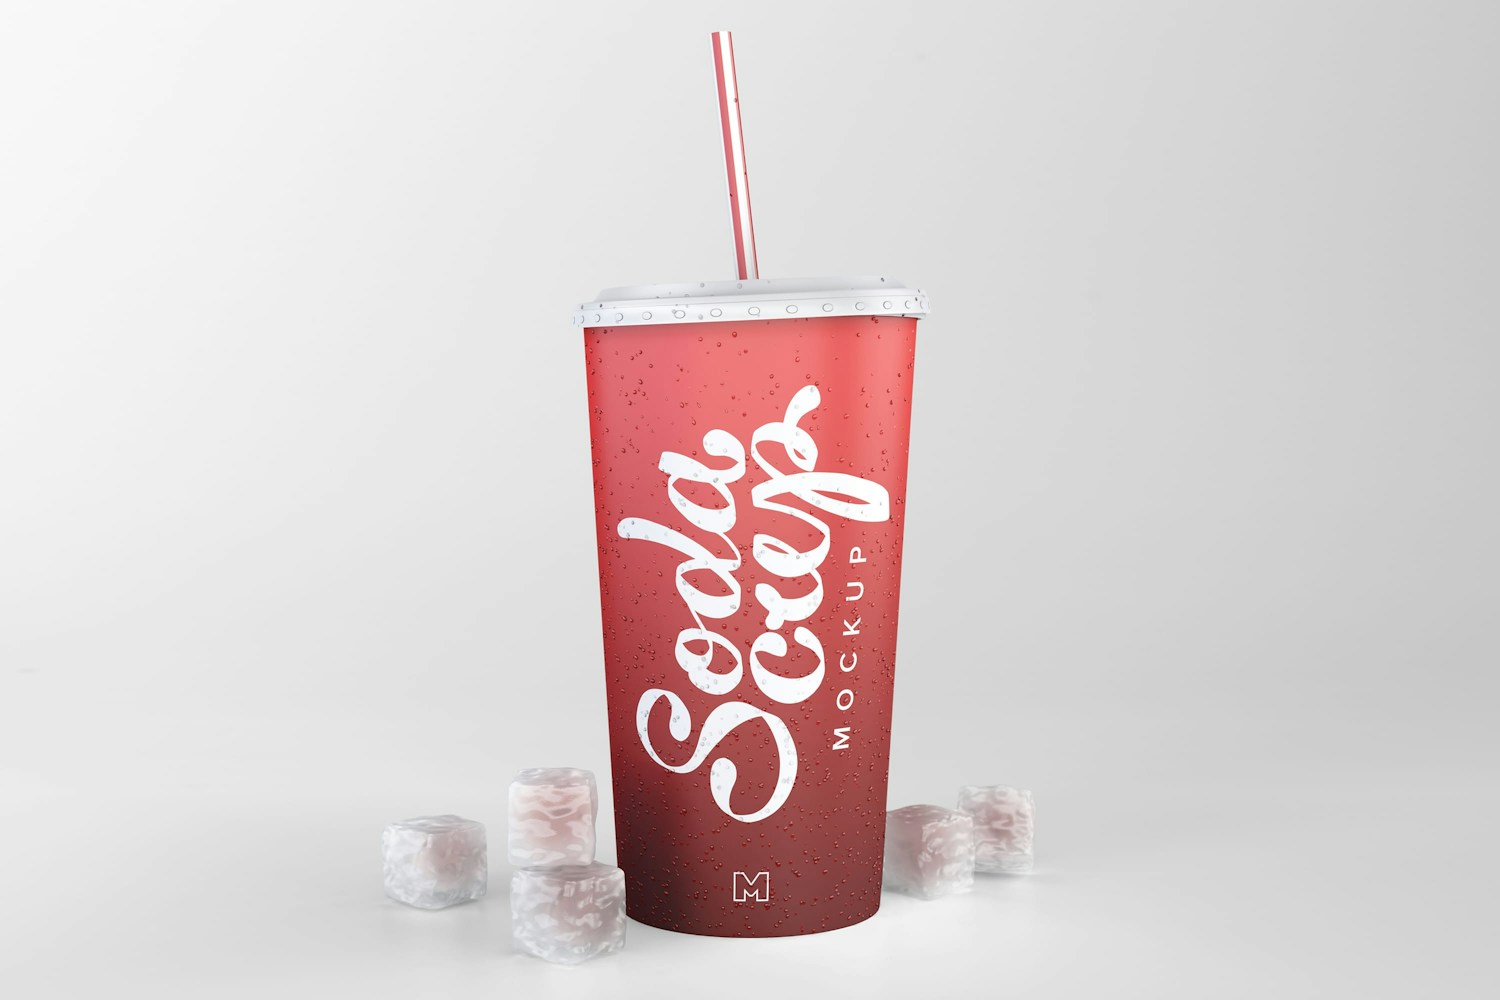 Soda Cup Mockup 02